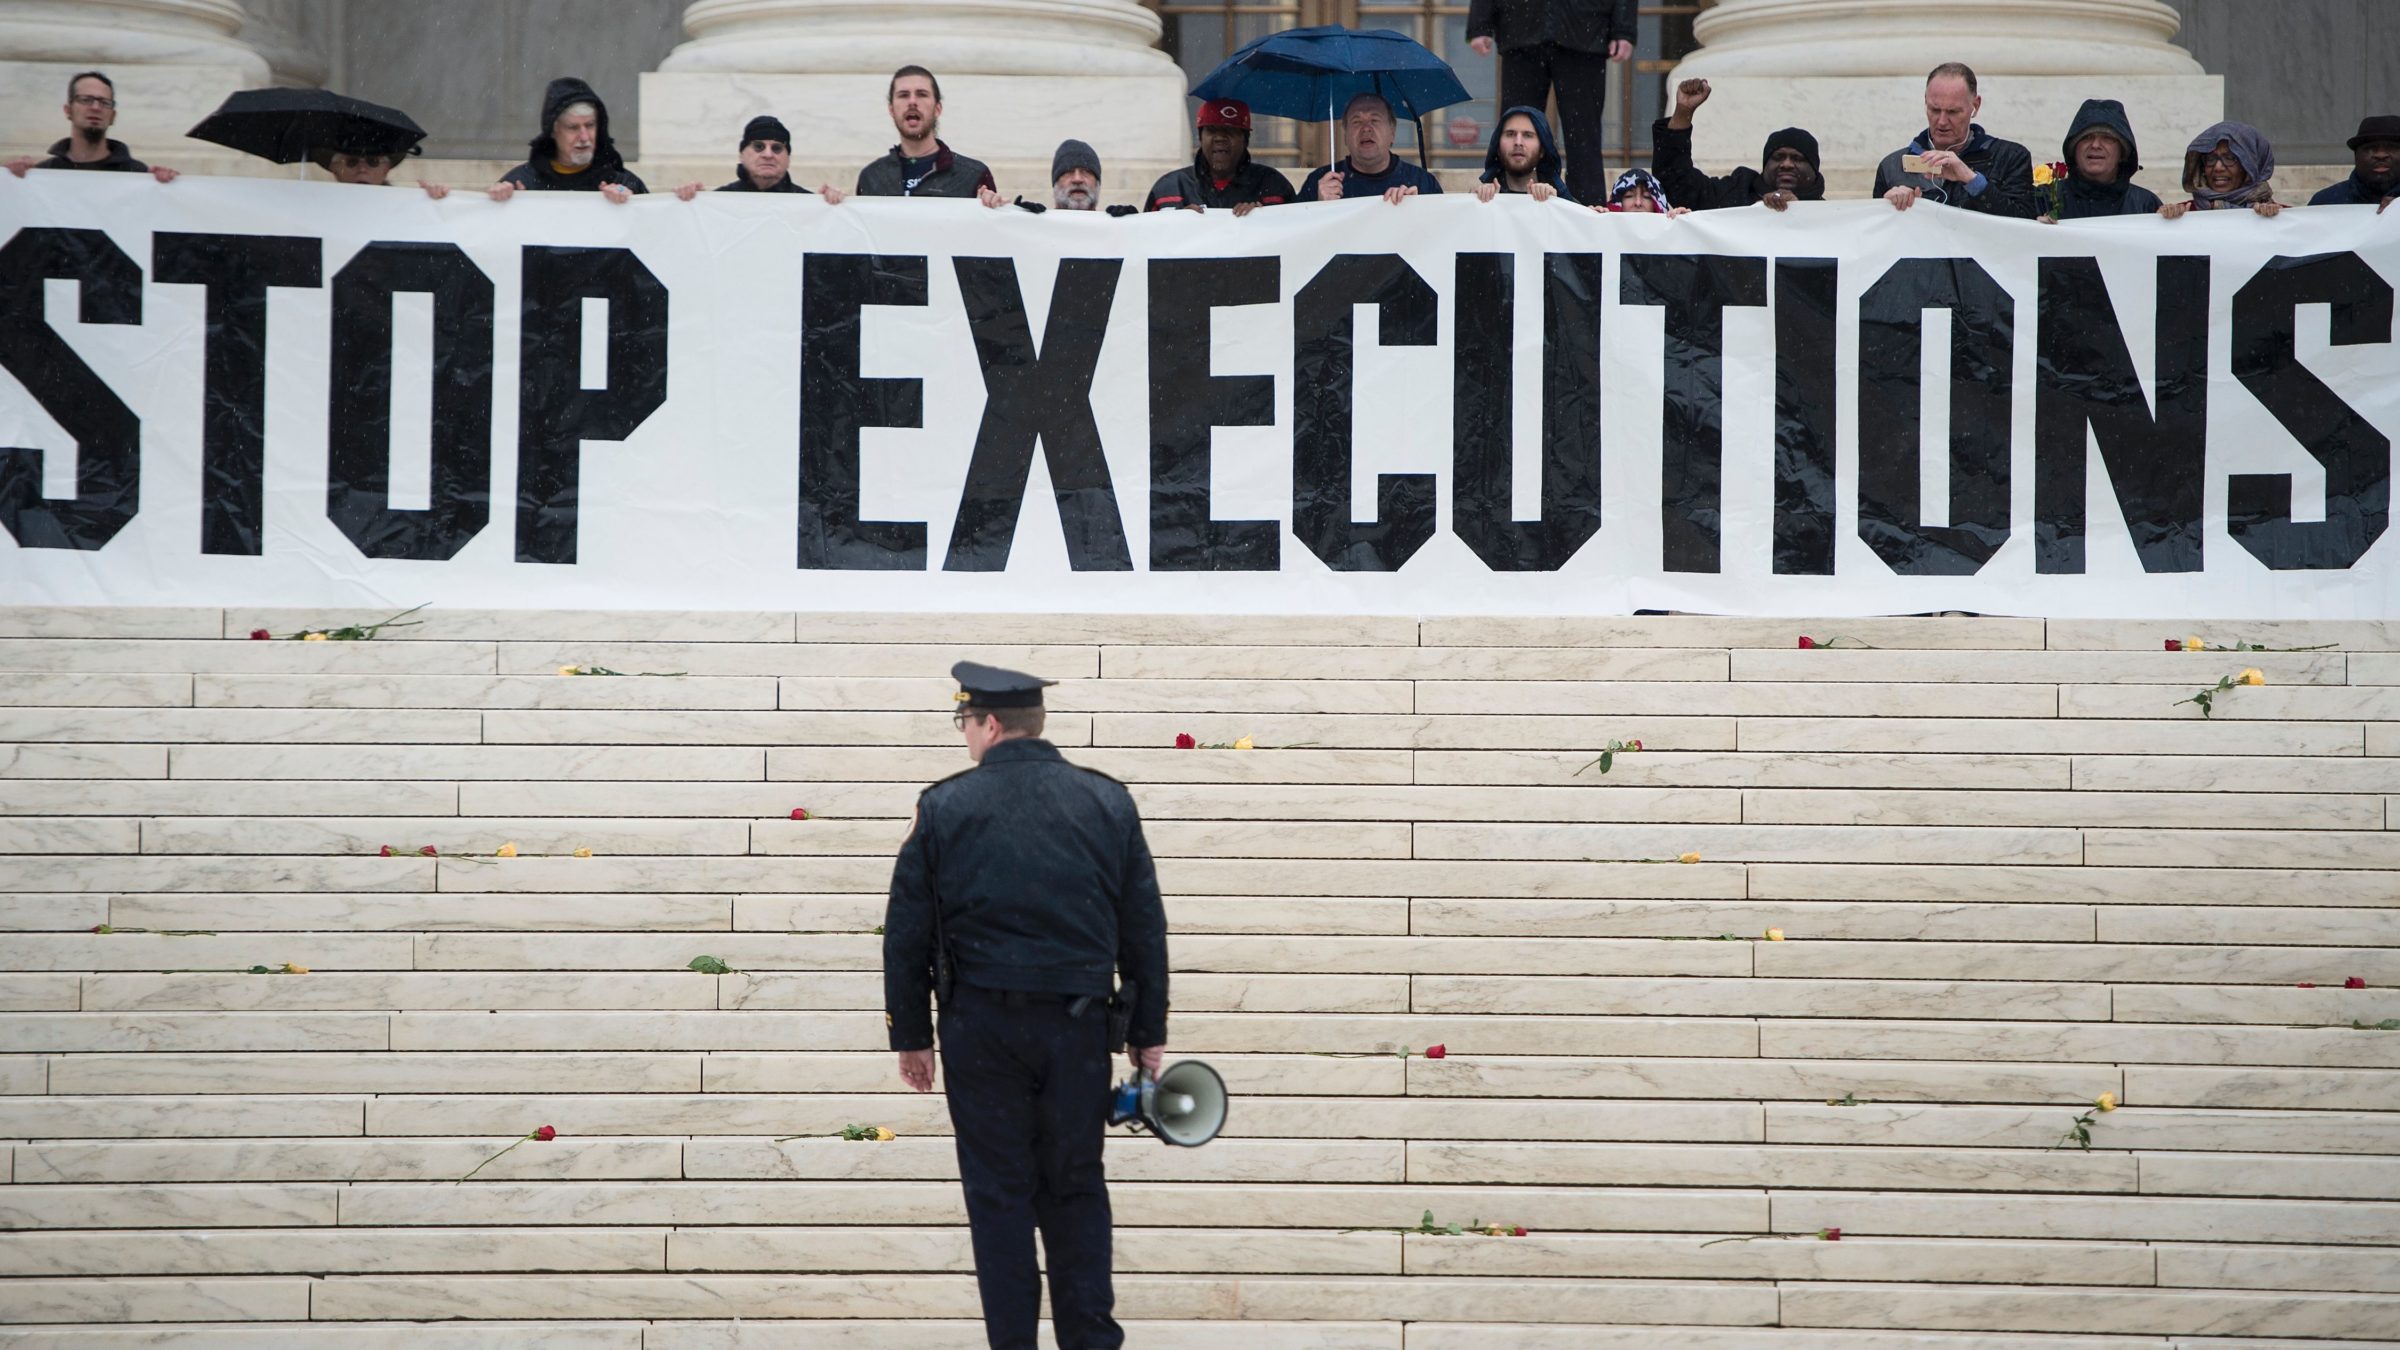 Shinn v Ramirez: Will SCOTUS Slam the Door on Death Row Inmates?